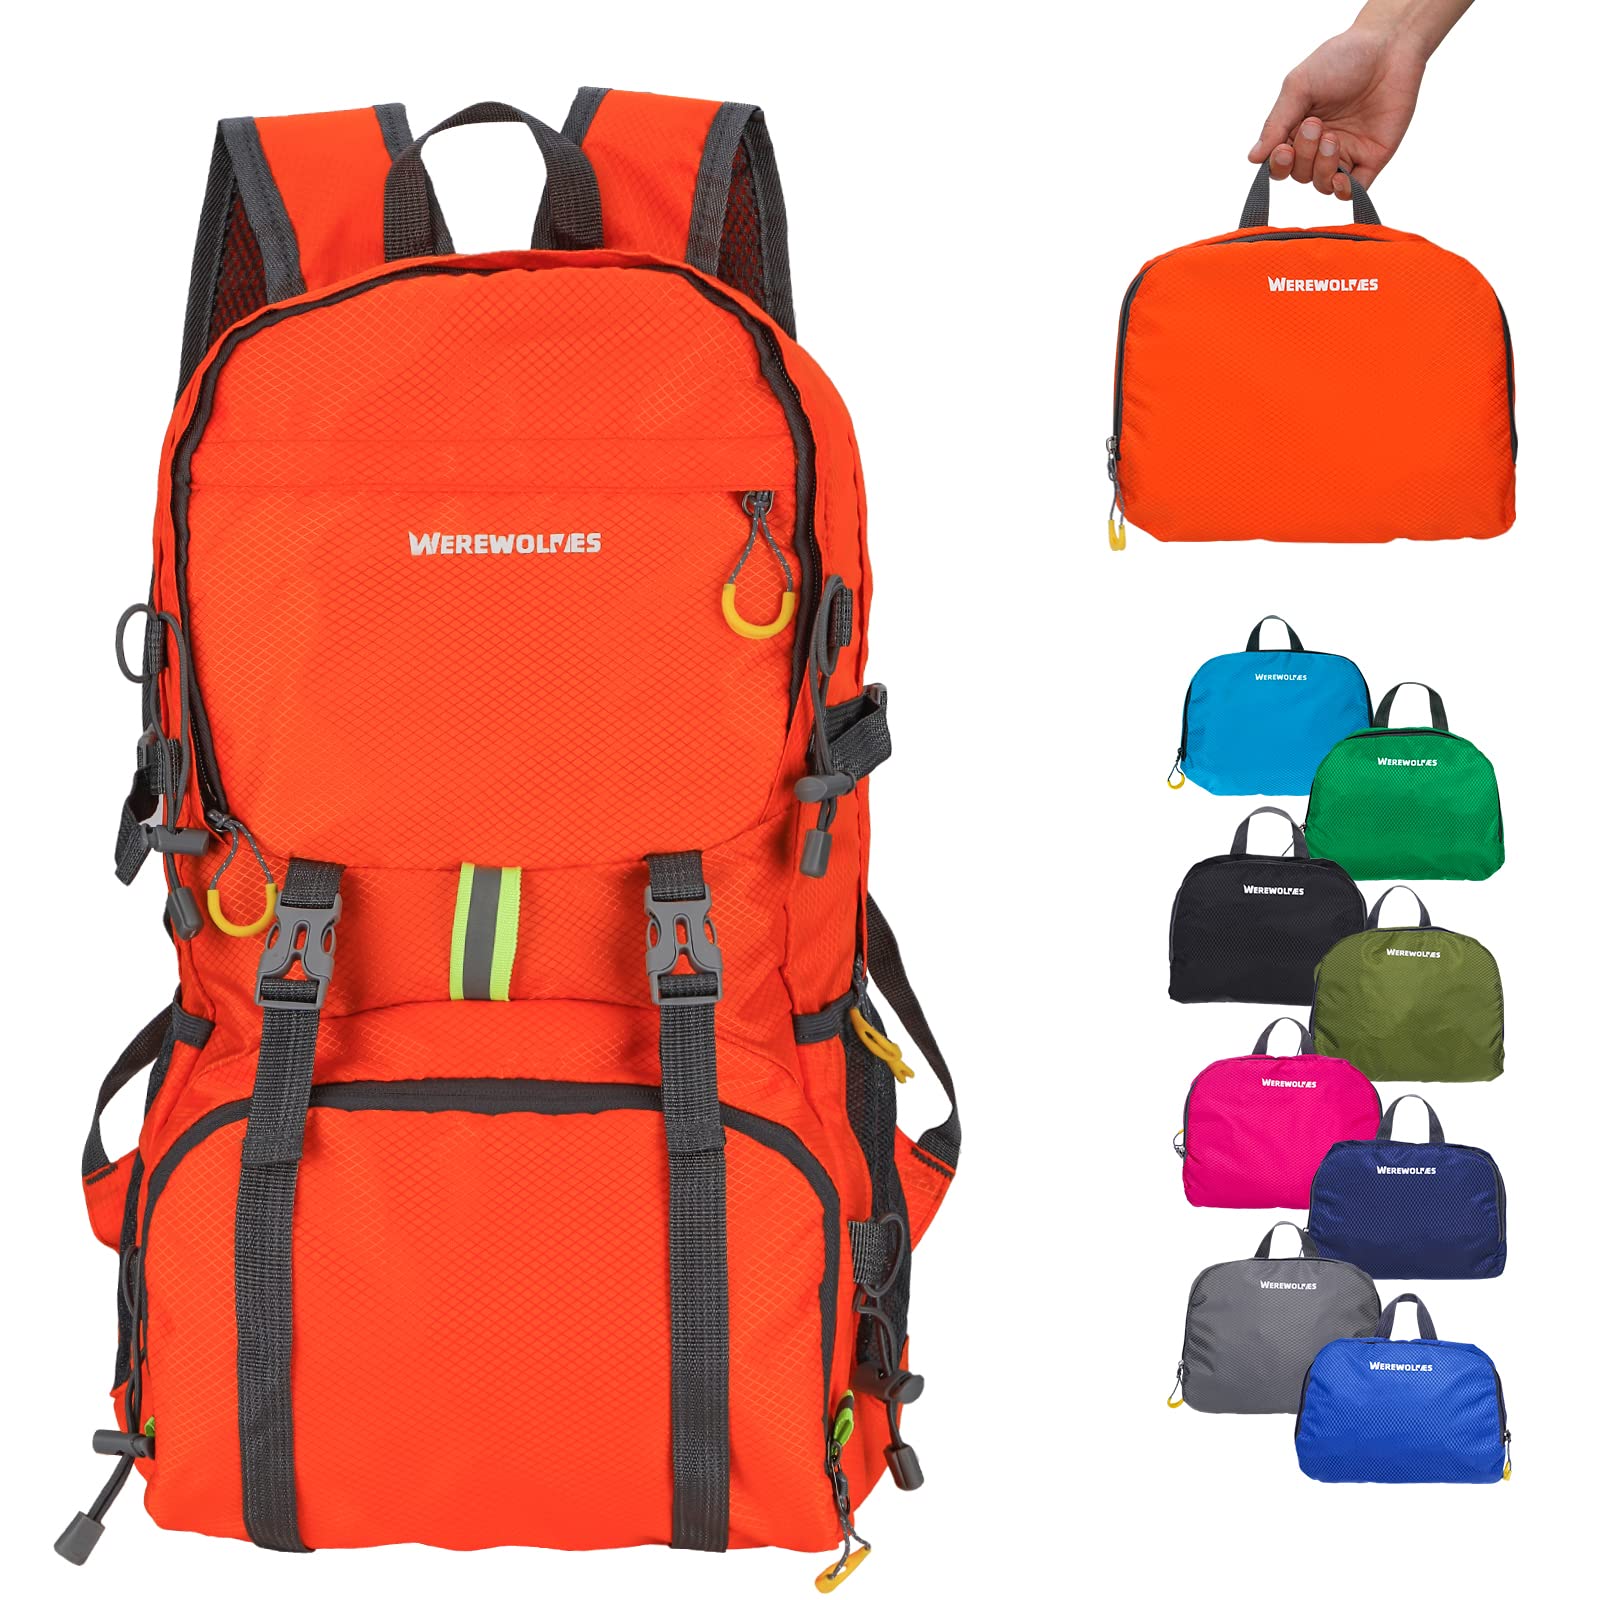 20/35L Lightweight Hiking Backpack Ultralight Water Resistant Travel Packable Daypack for Women Men